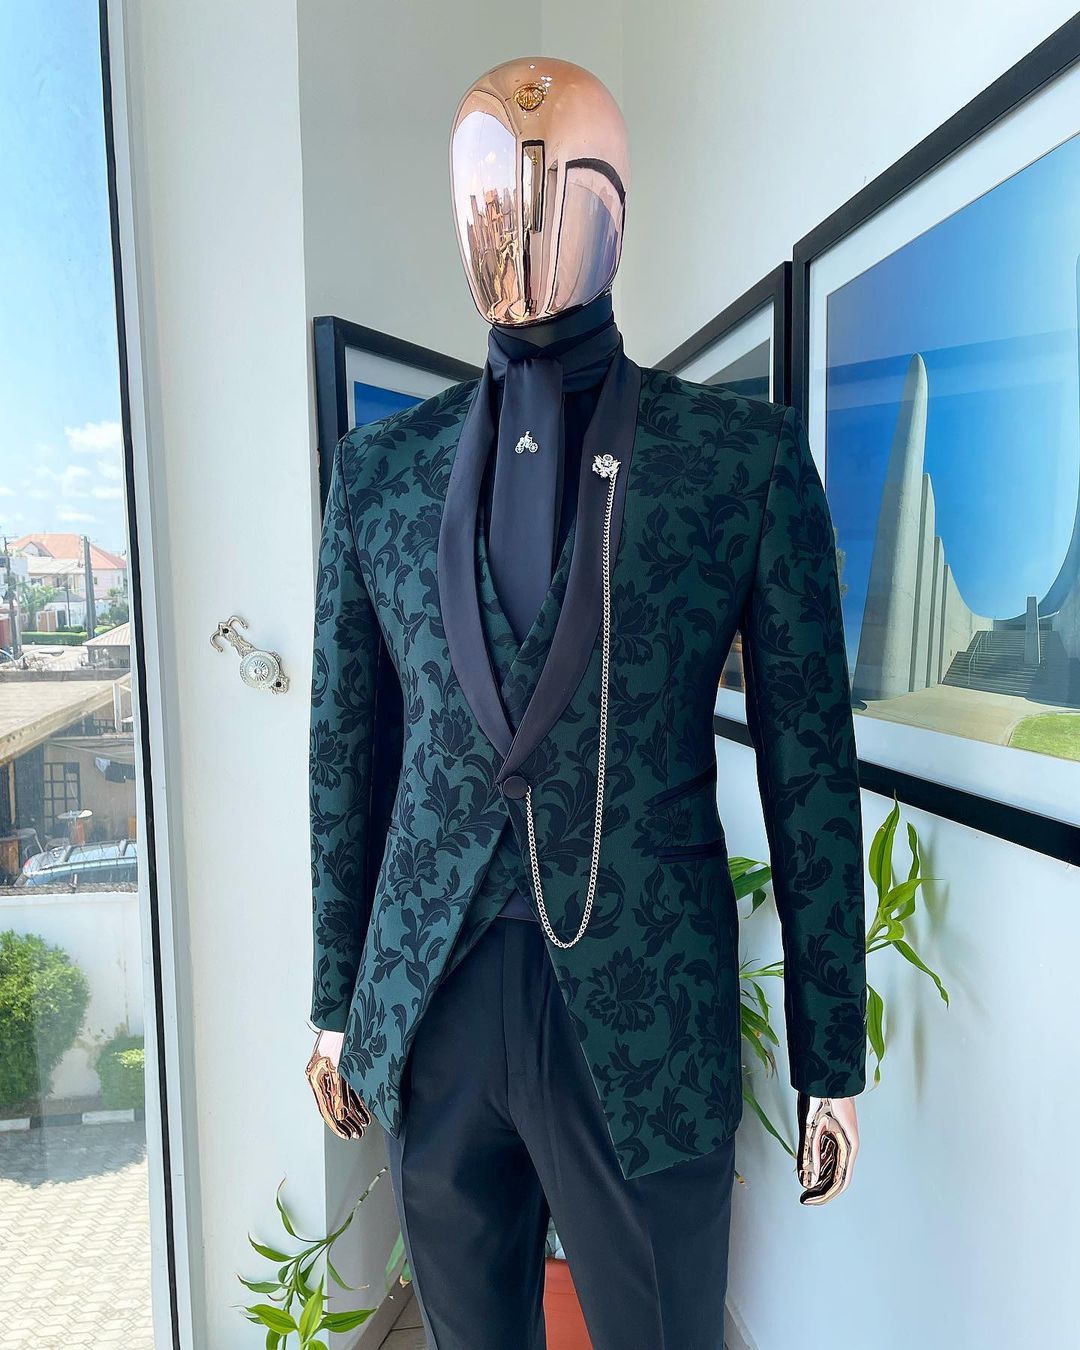 Shop “LT” front cut tuxedo suit, black bishop neck shirt -Deji & Kola